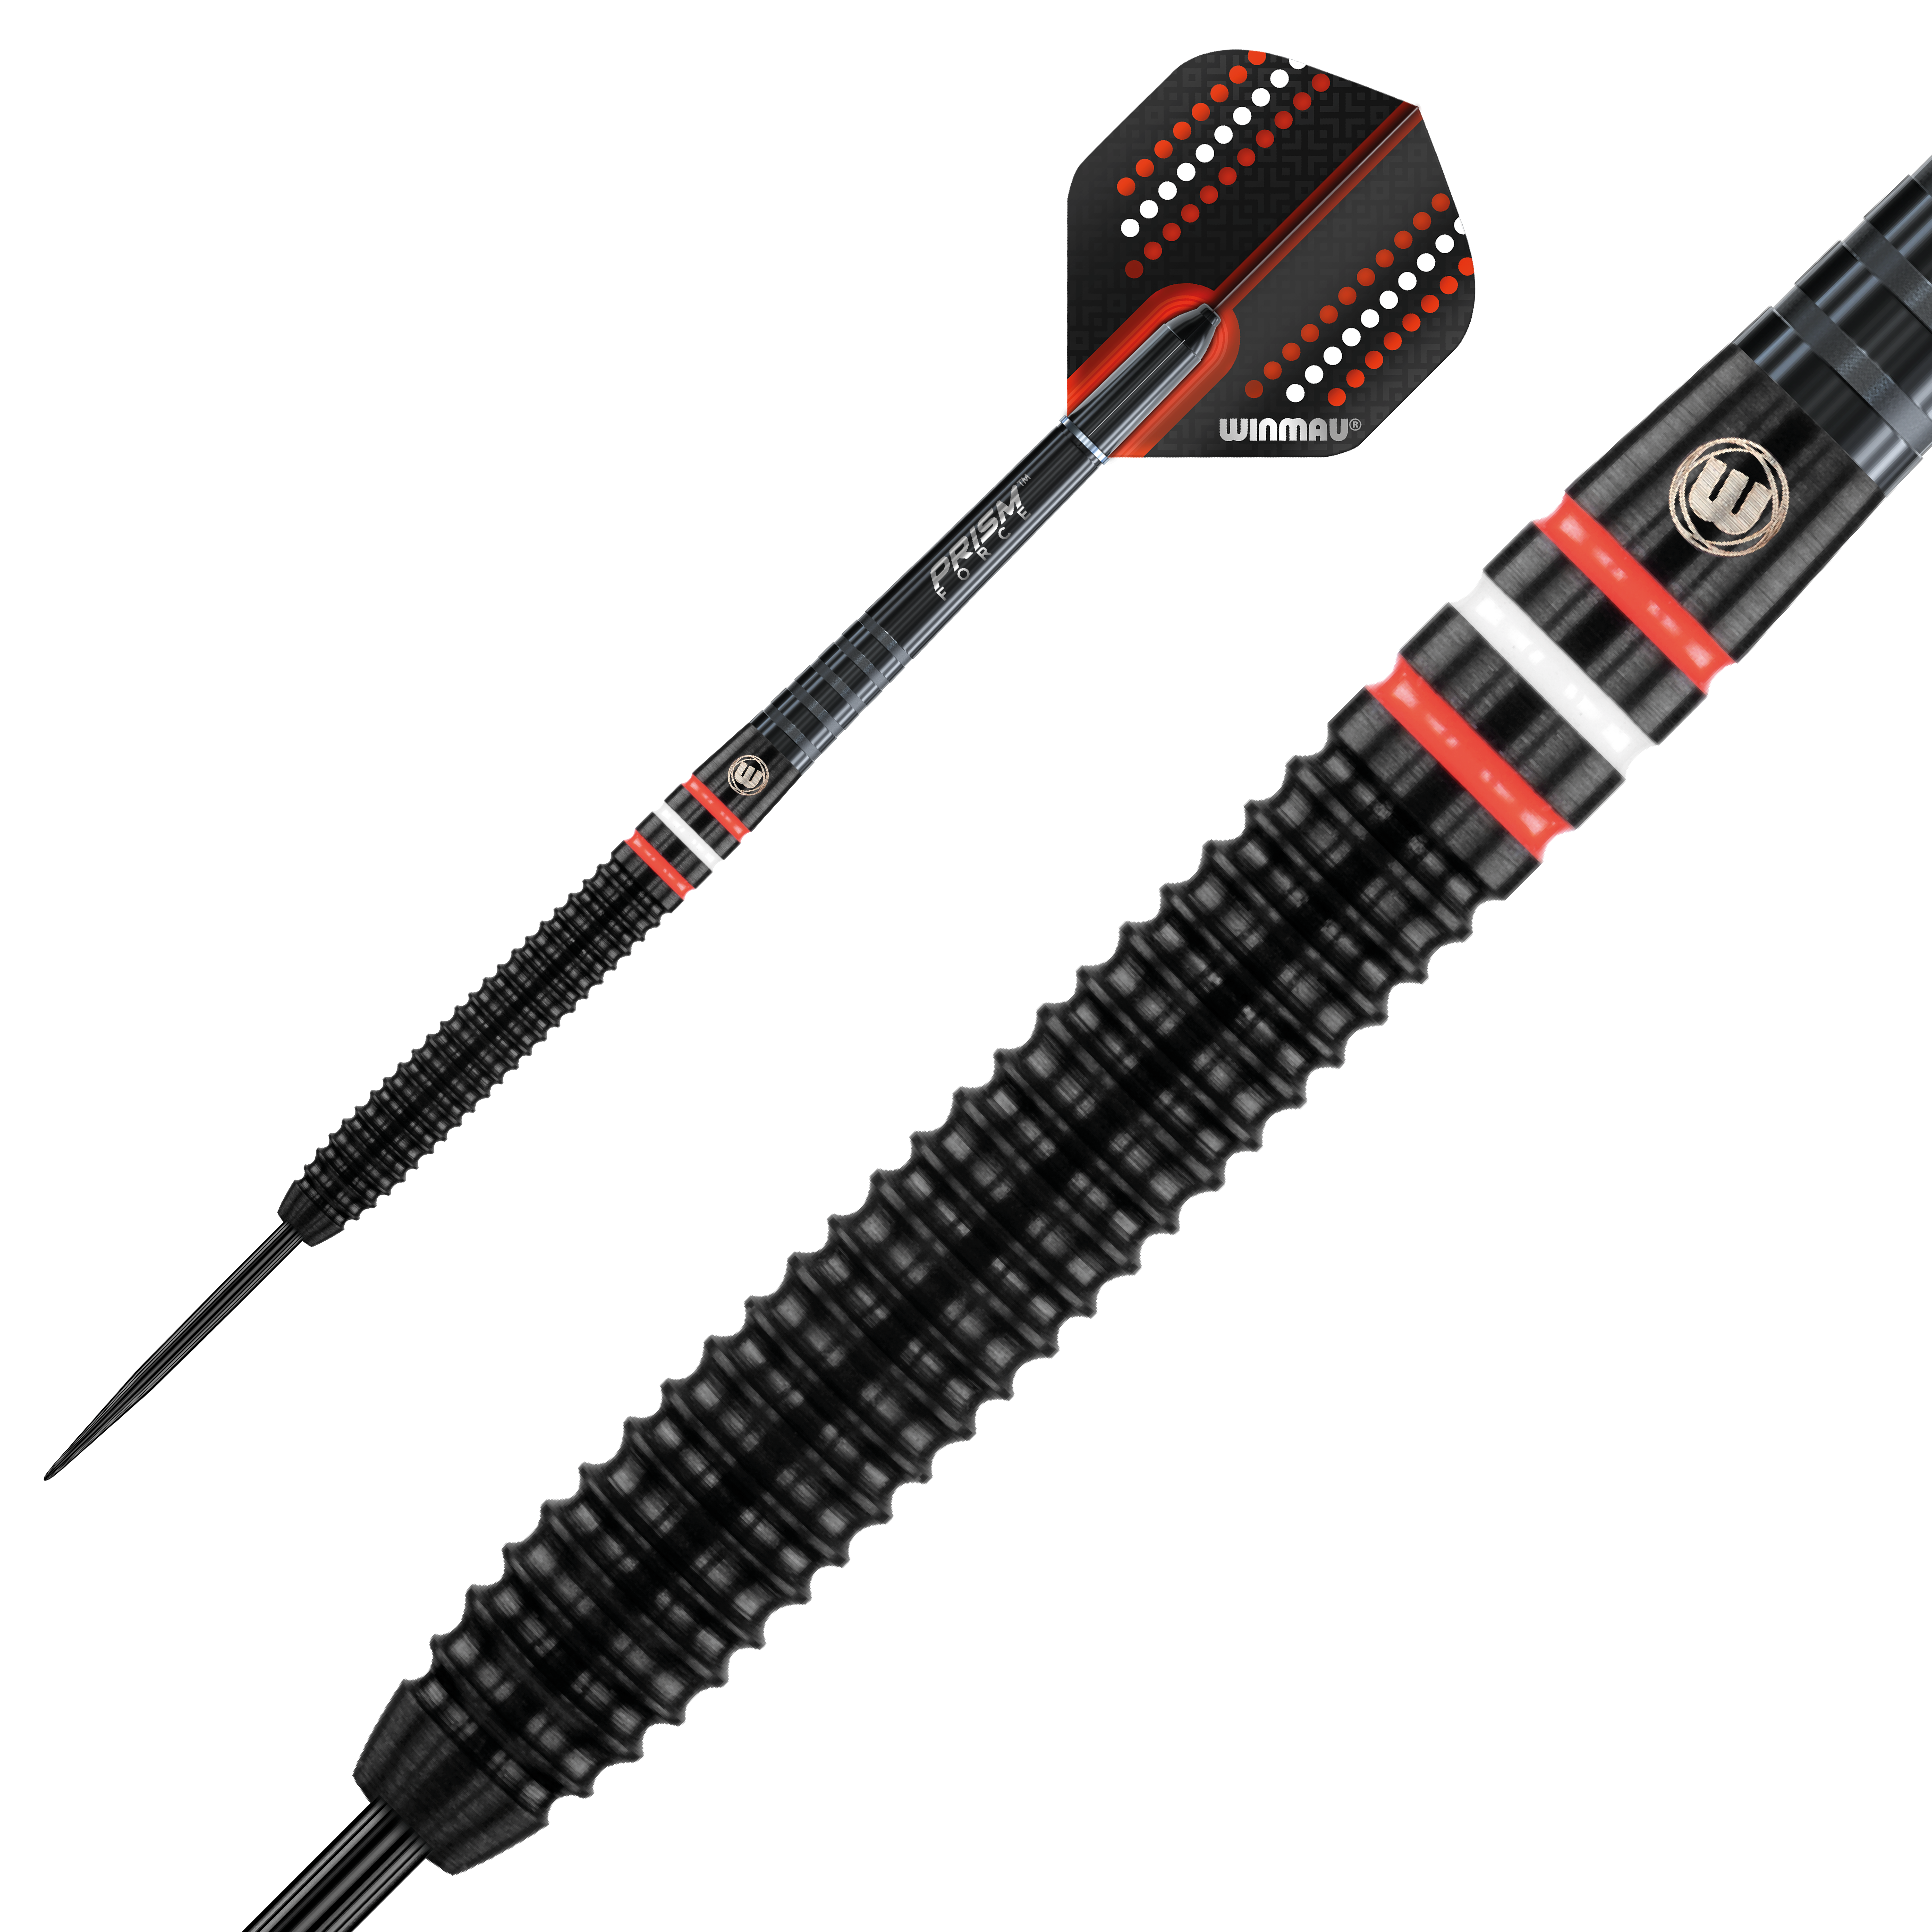 Winmau Pro-Line steeltip darts 22 gram